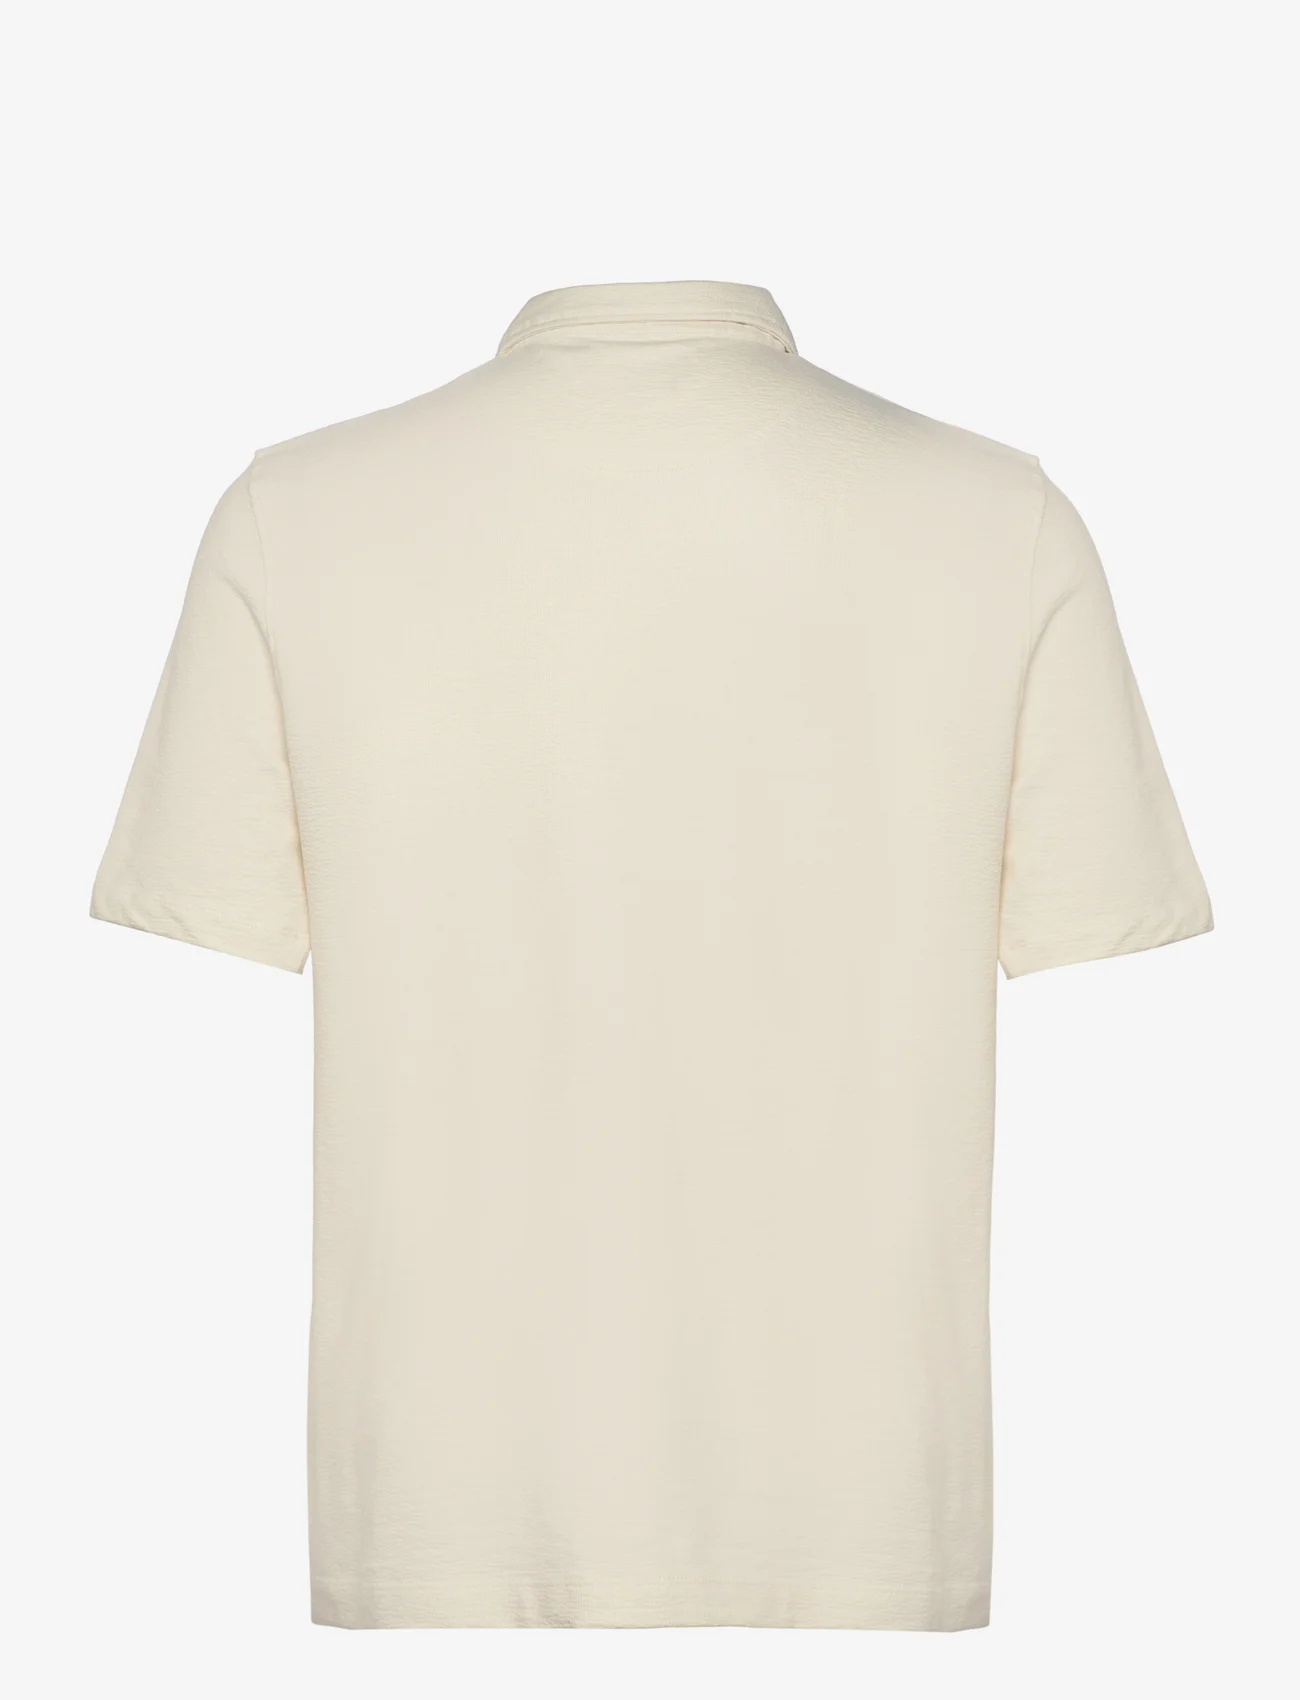 Clean Cut Copenhagen - Calton Structured Shirt S/S - krótki rękaw - ecru - 1